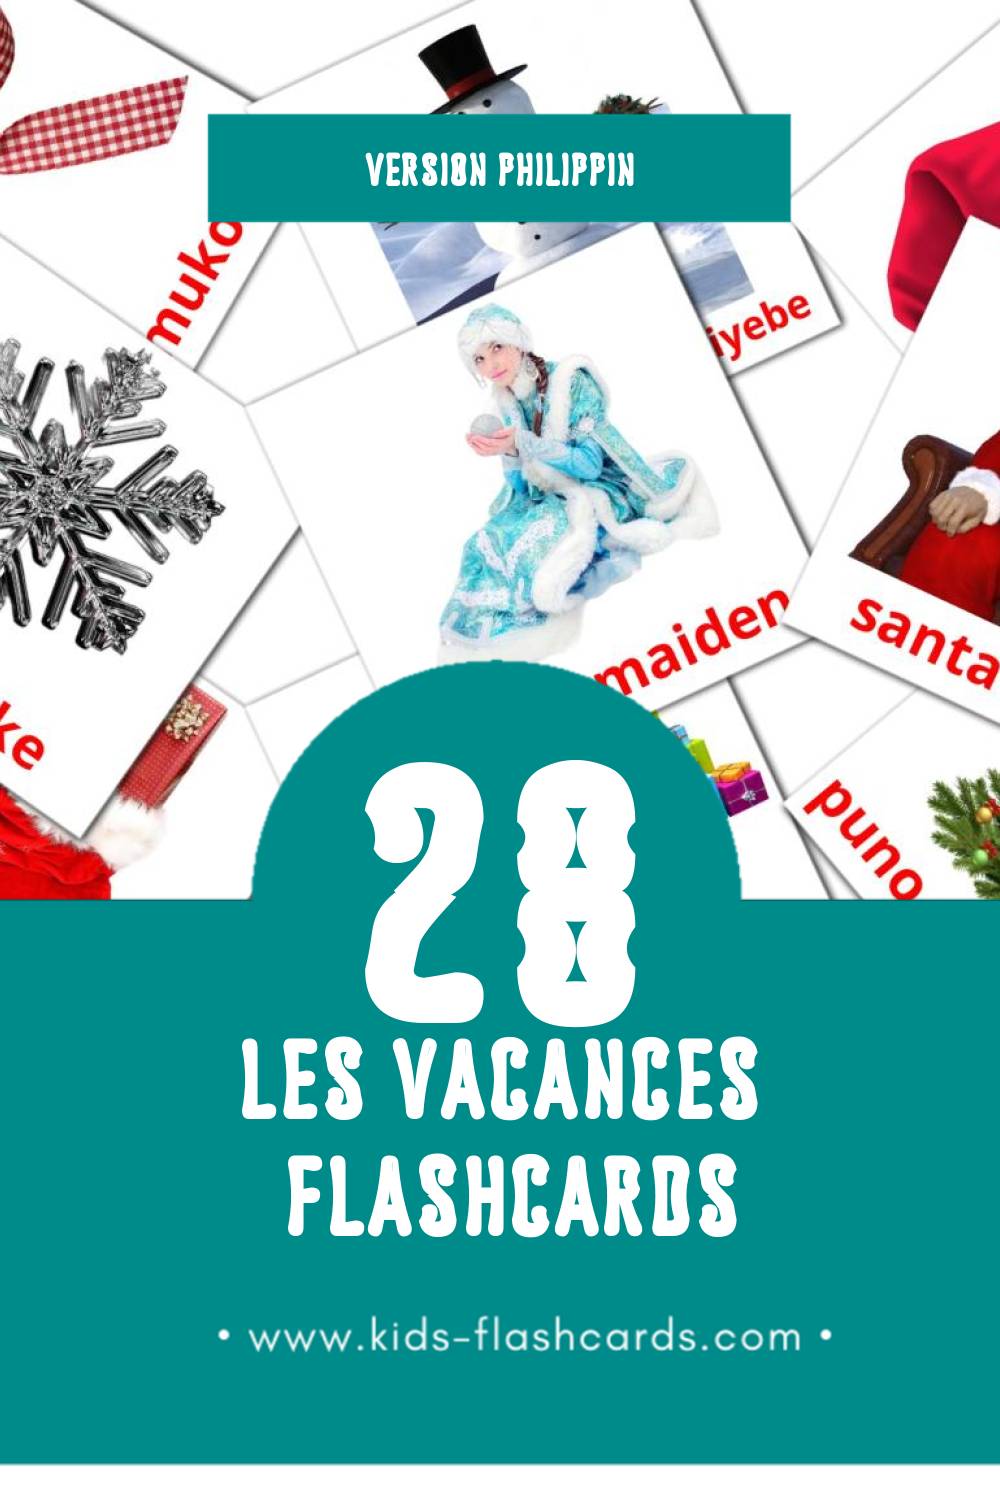 Flashcards Visual Piyesta Opisyal pour les tout-petits (28 cartes en Philippin)